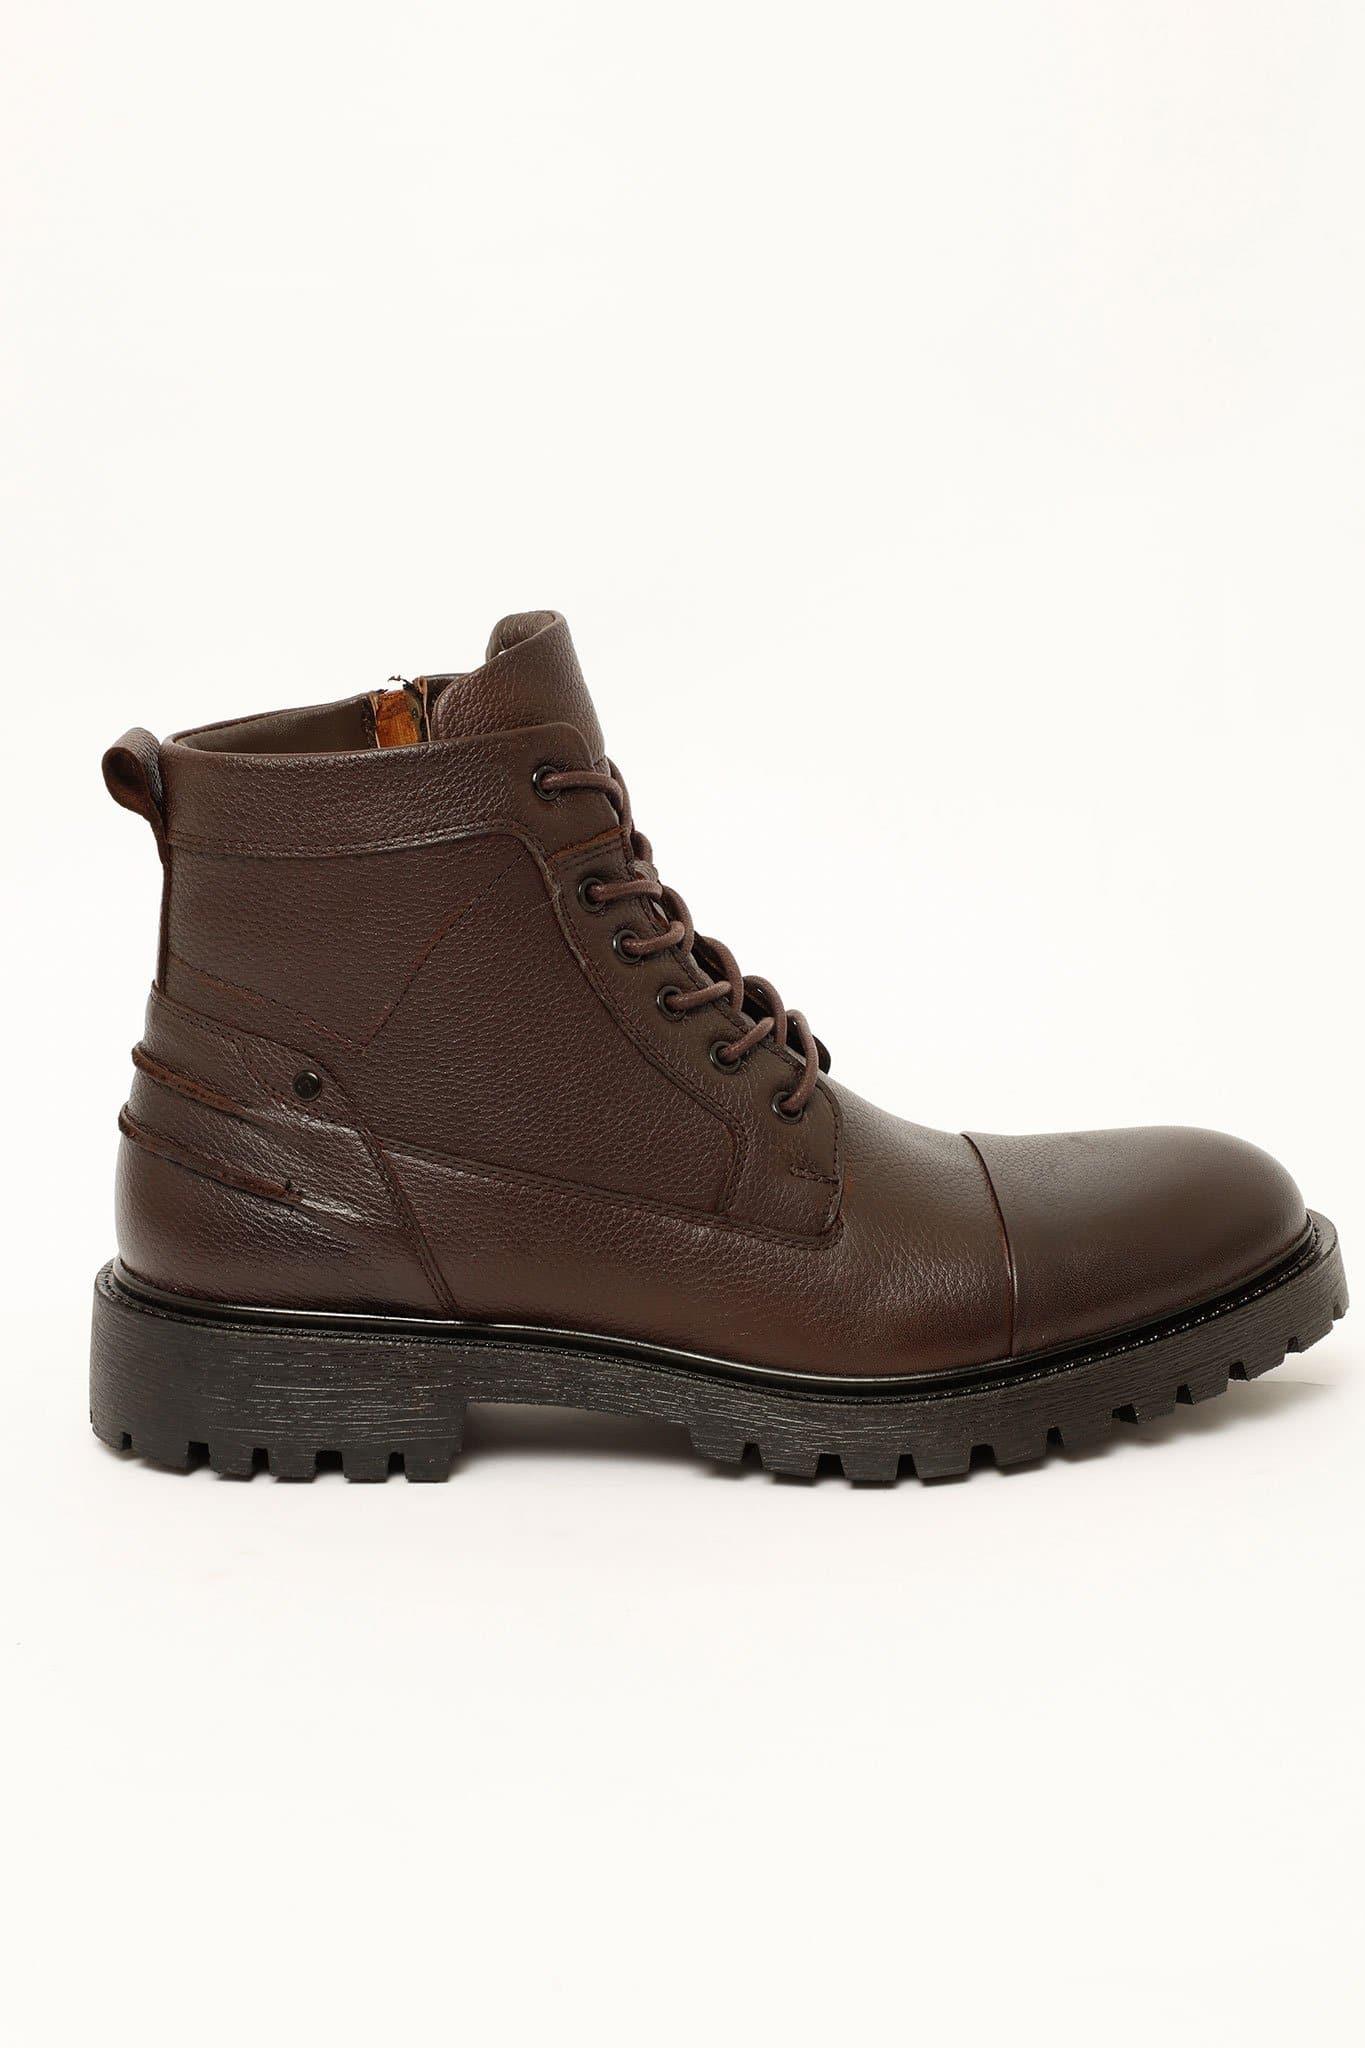 PB FAS BOOTS 1, SHOE, CORADO, boots, dark brown, men, shoe, coradomoda, coradomoda.com